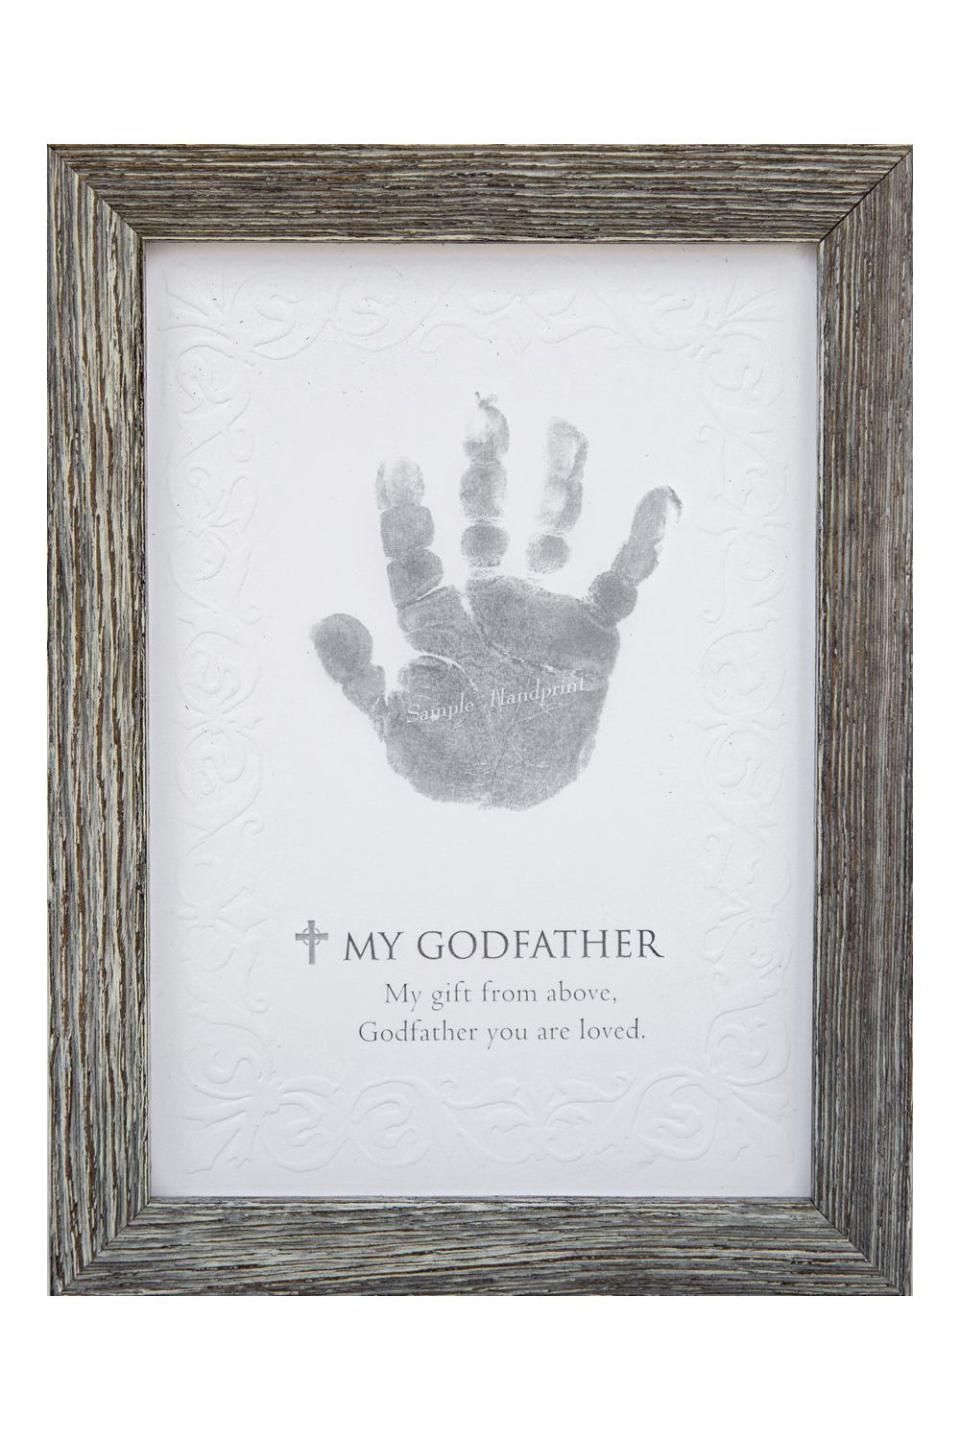 The Godfather Godchild Handprint Gift